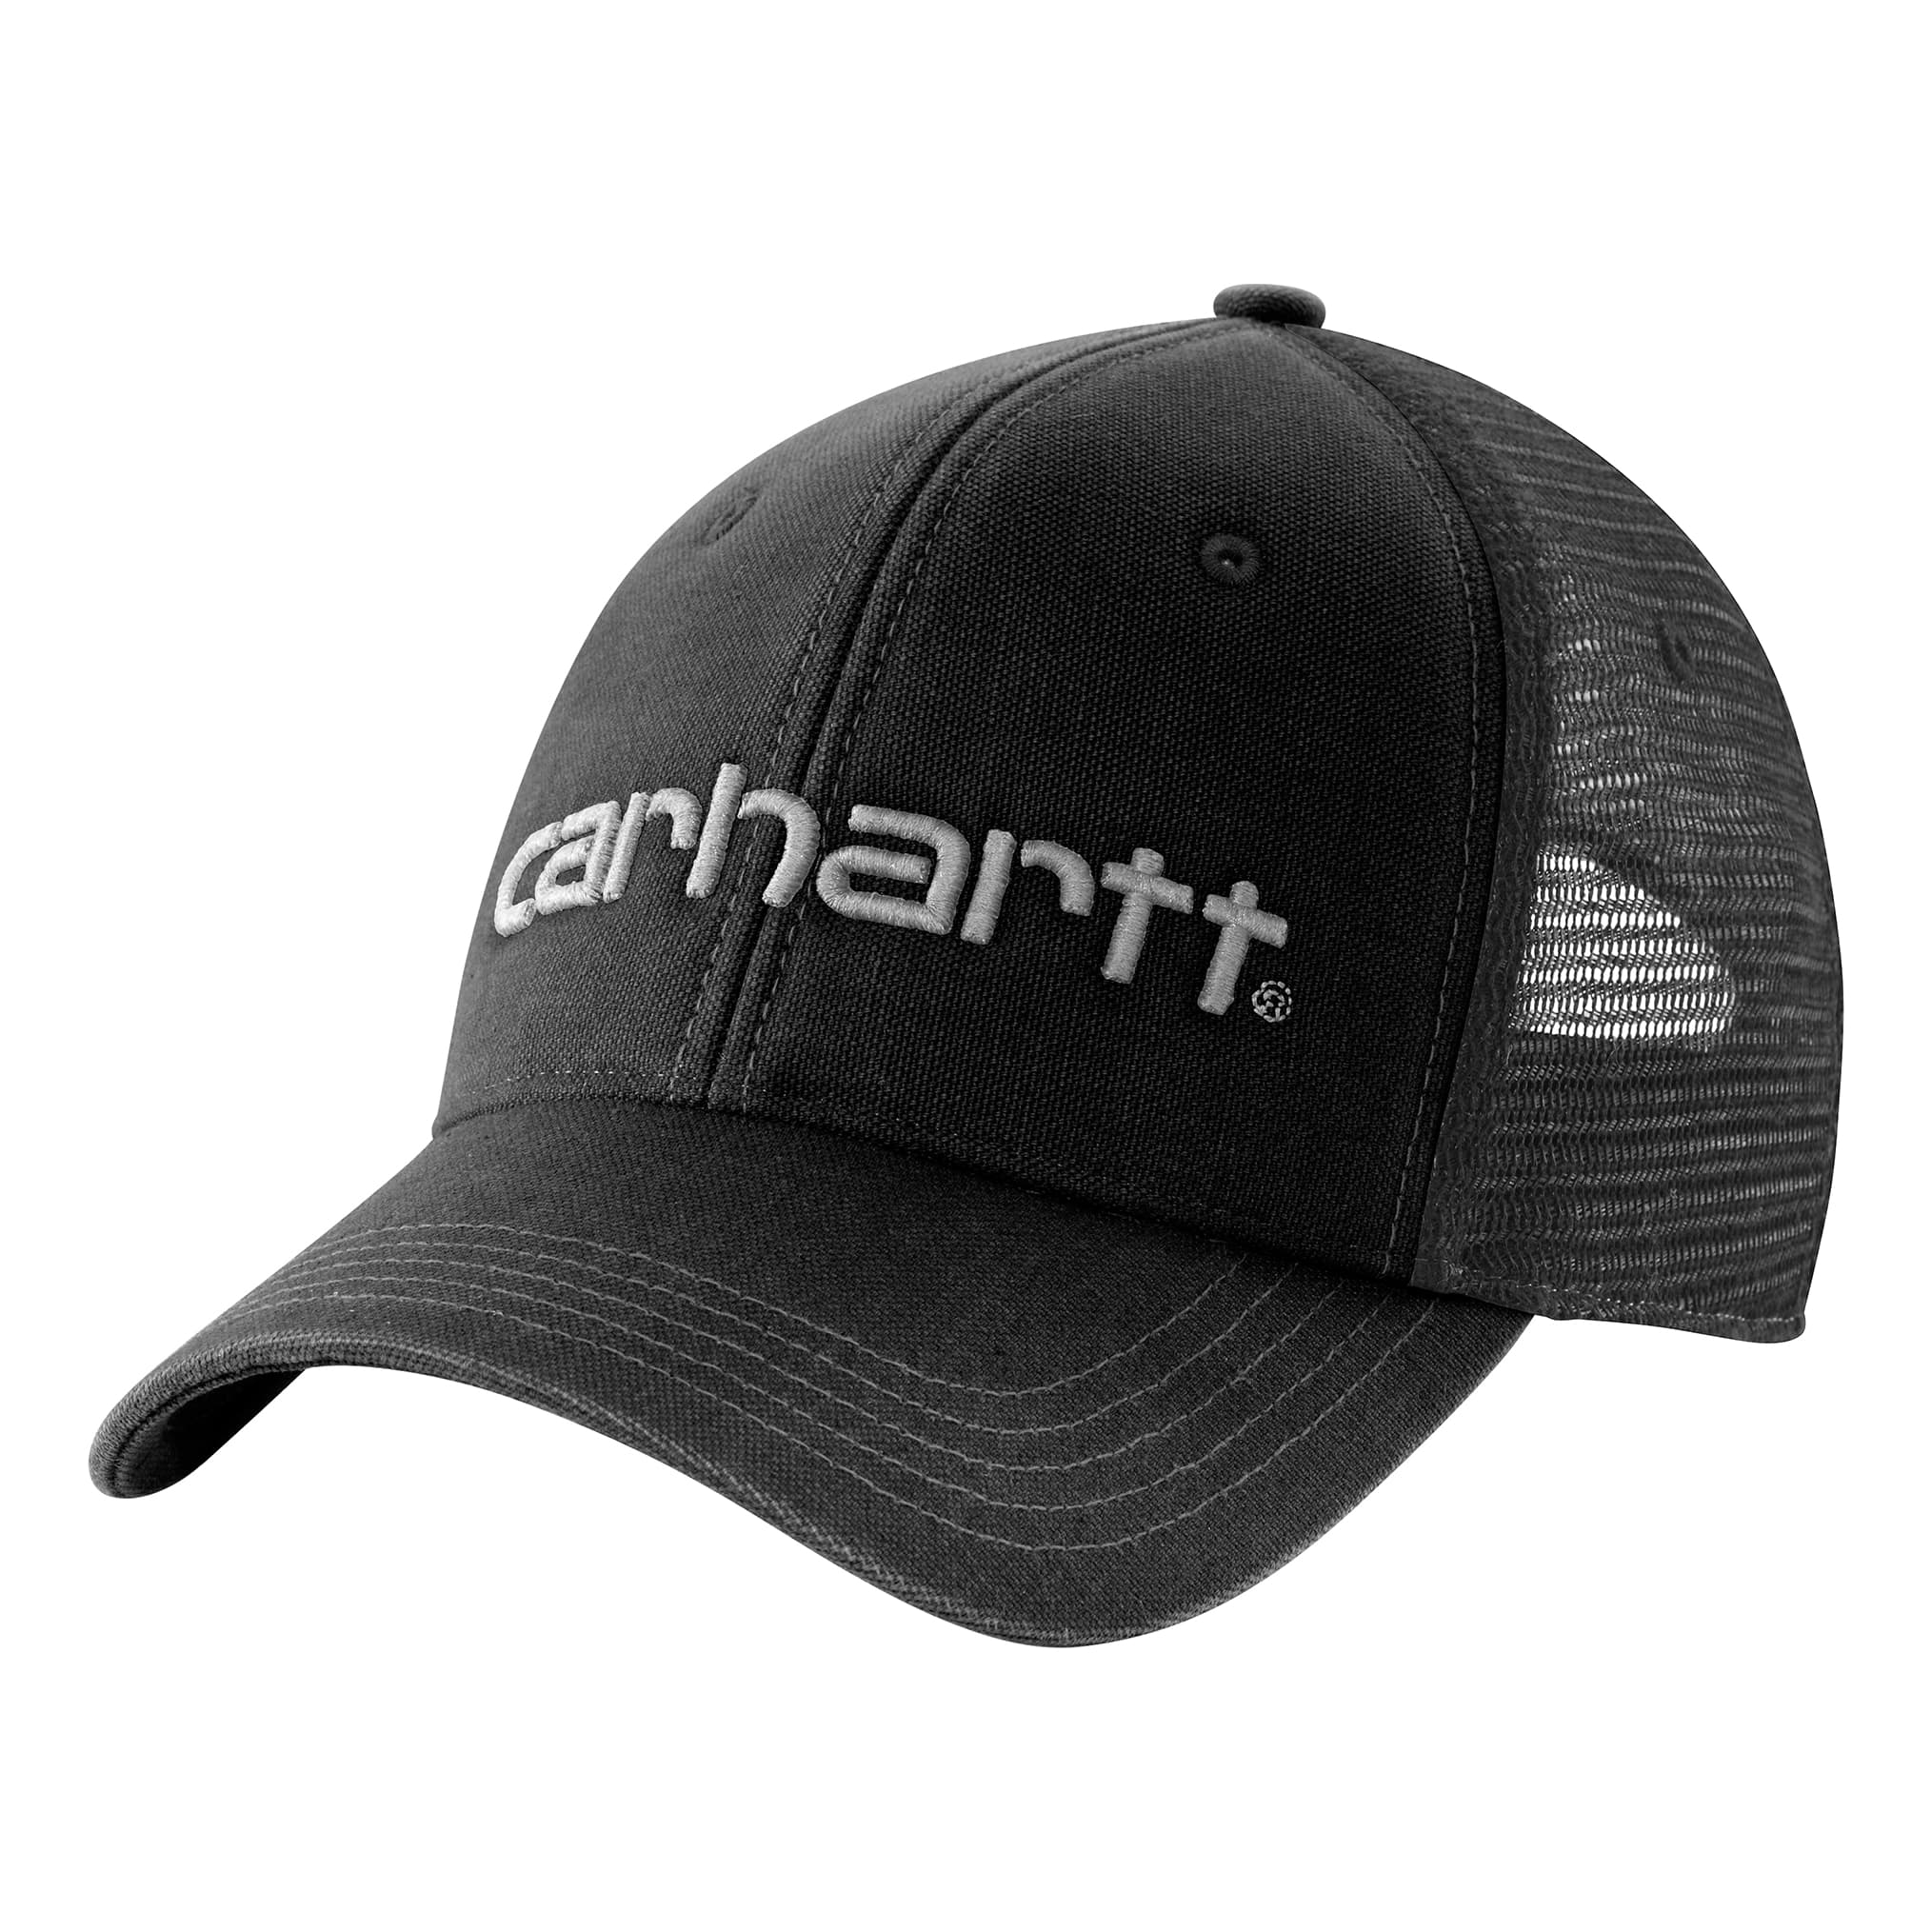 Carhartt® Men’s Dunmore Cap - Black